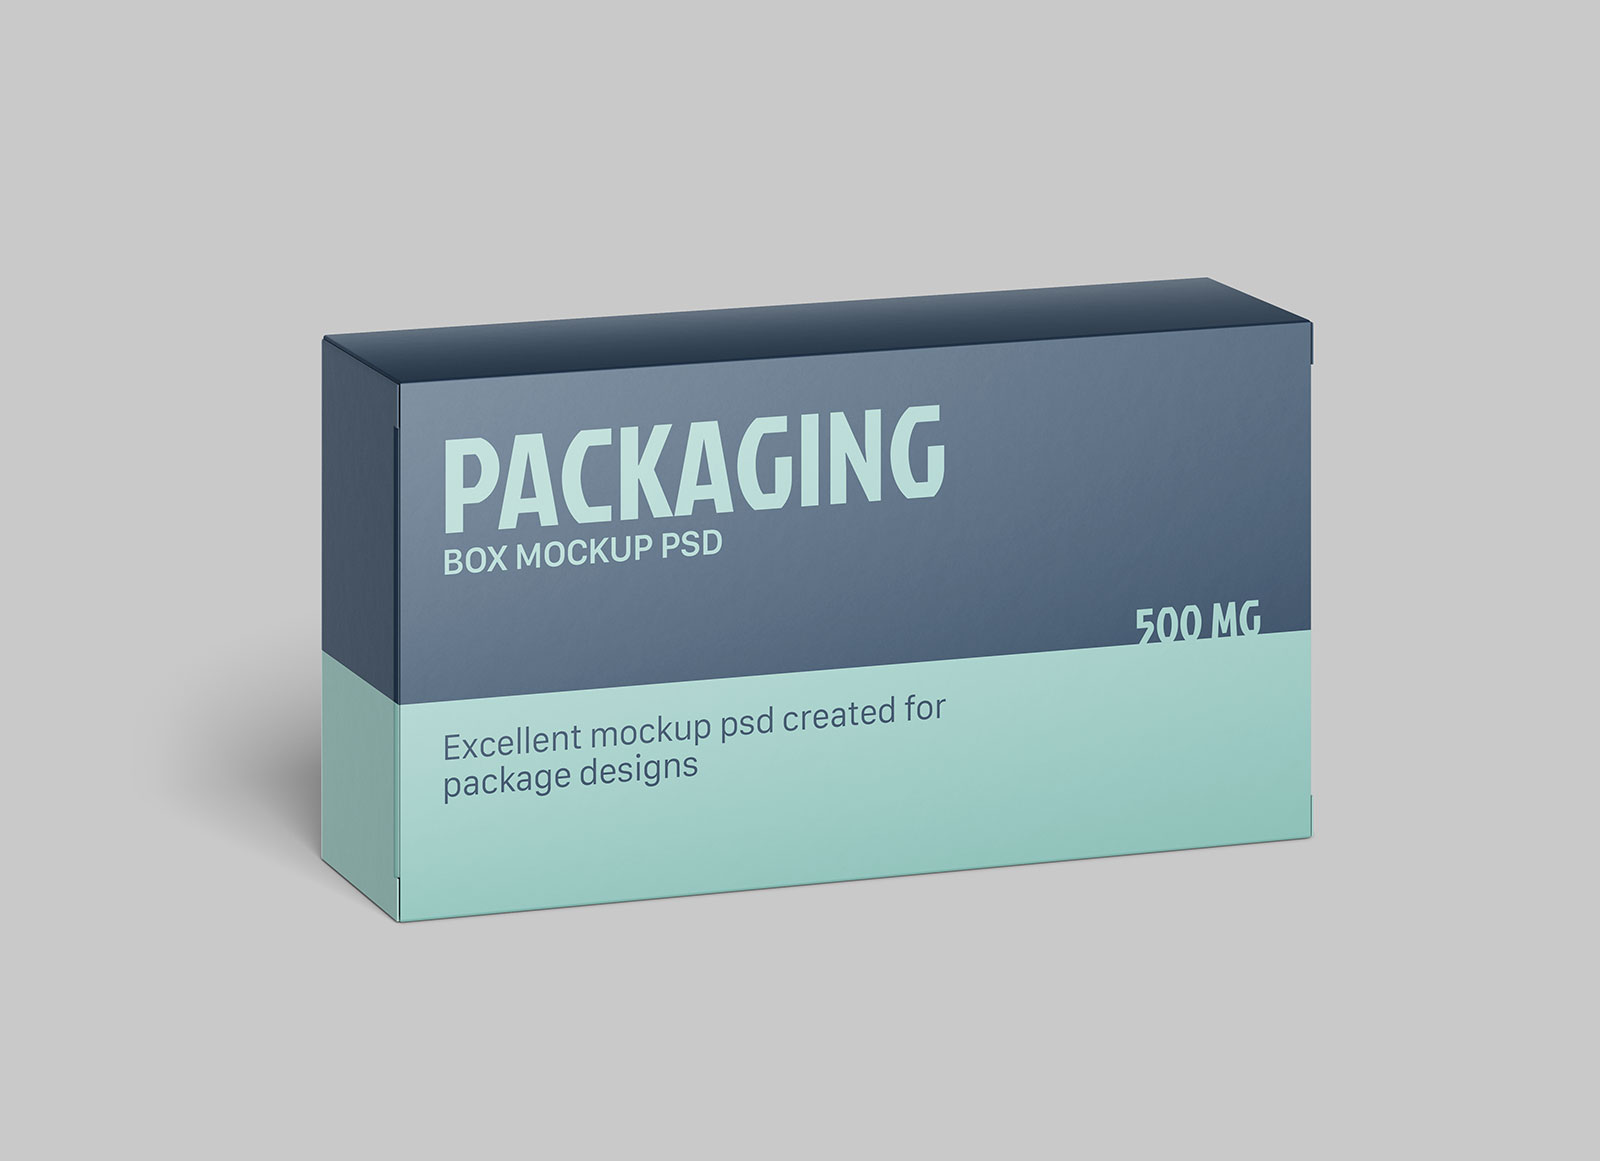 Horizontal Rectangle Box Packaging Mockup